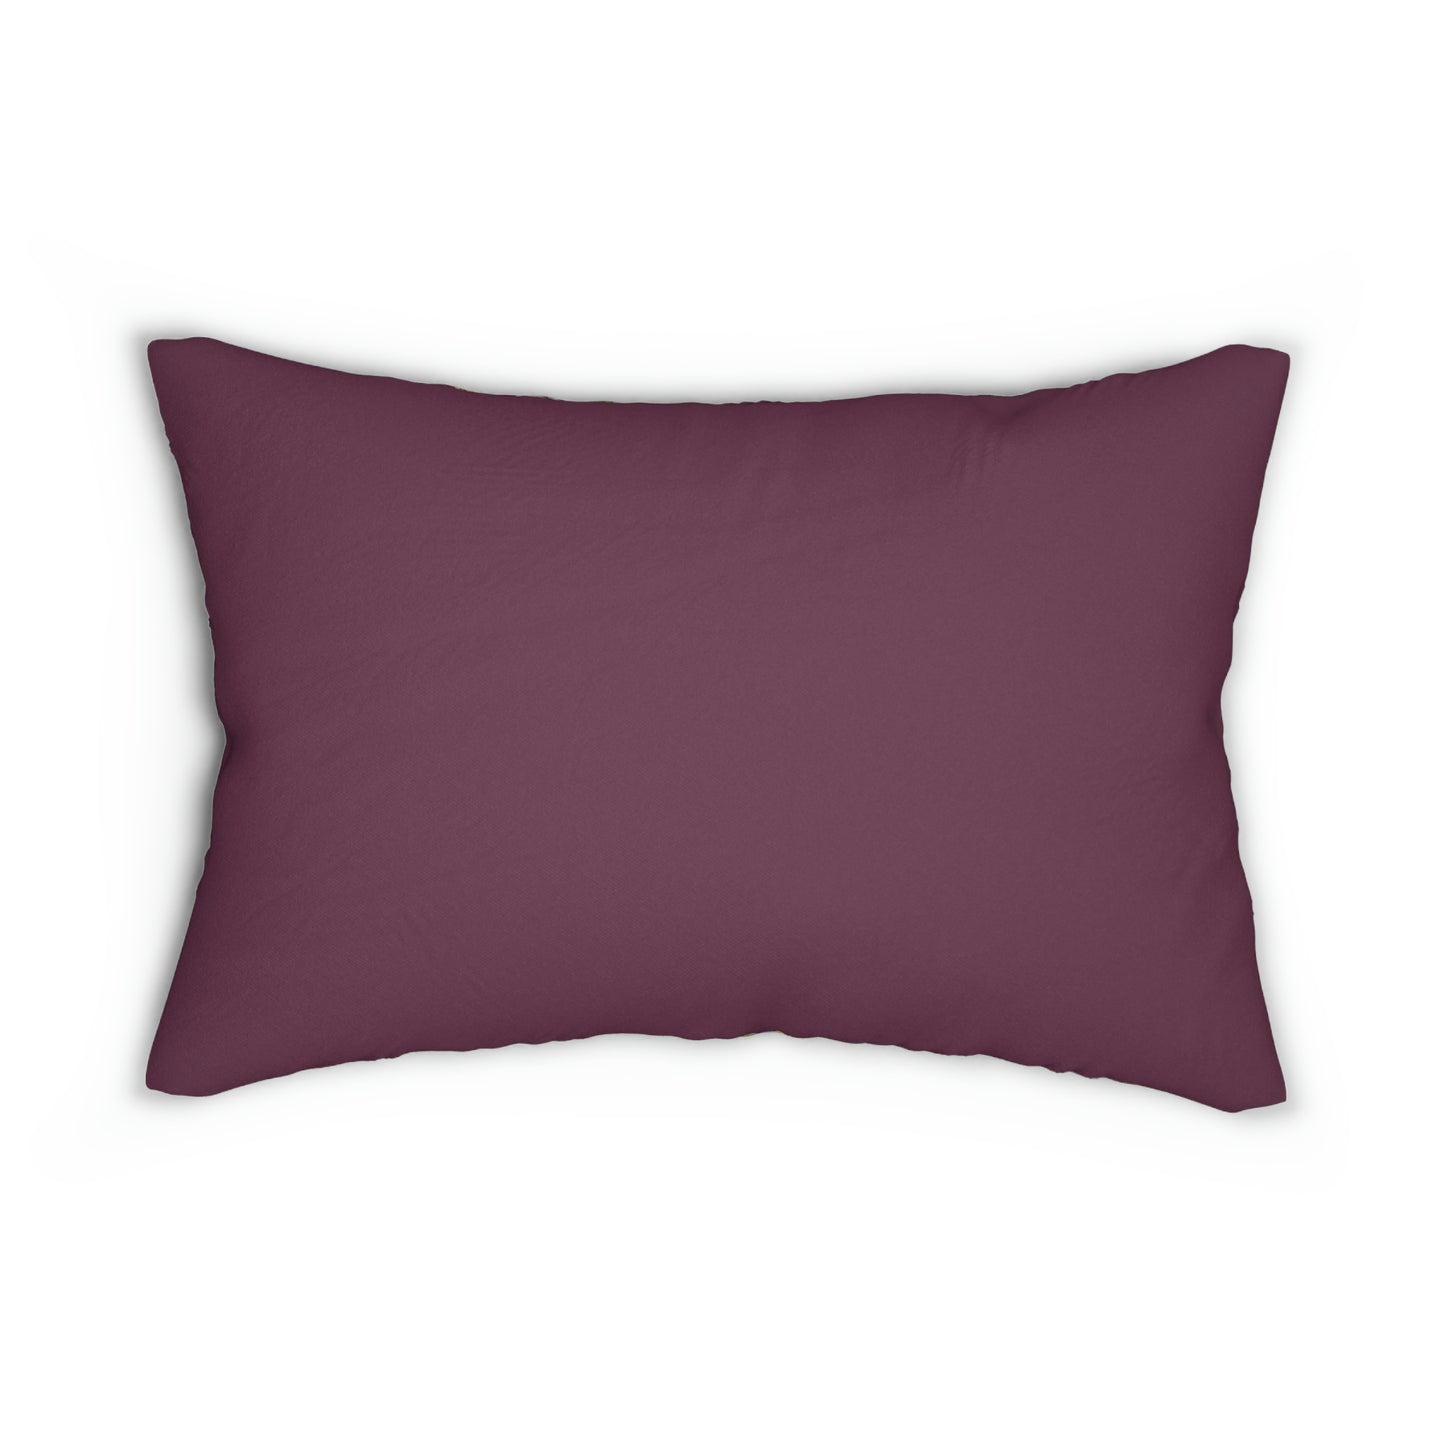 William Morris & Co Spun Poly Lumbar Cushion - Strawberry Thief Collection (Damson)